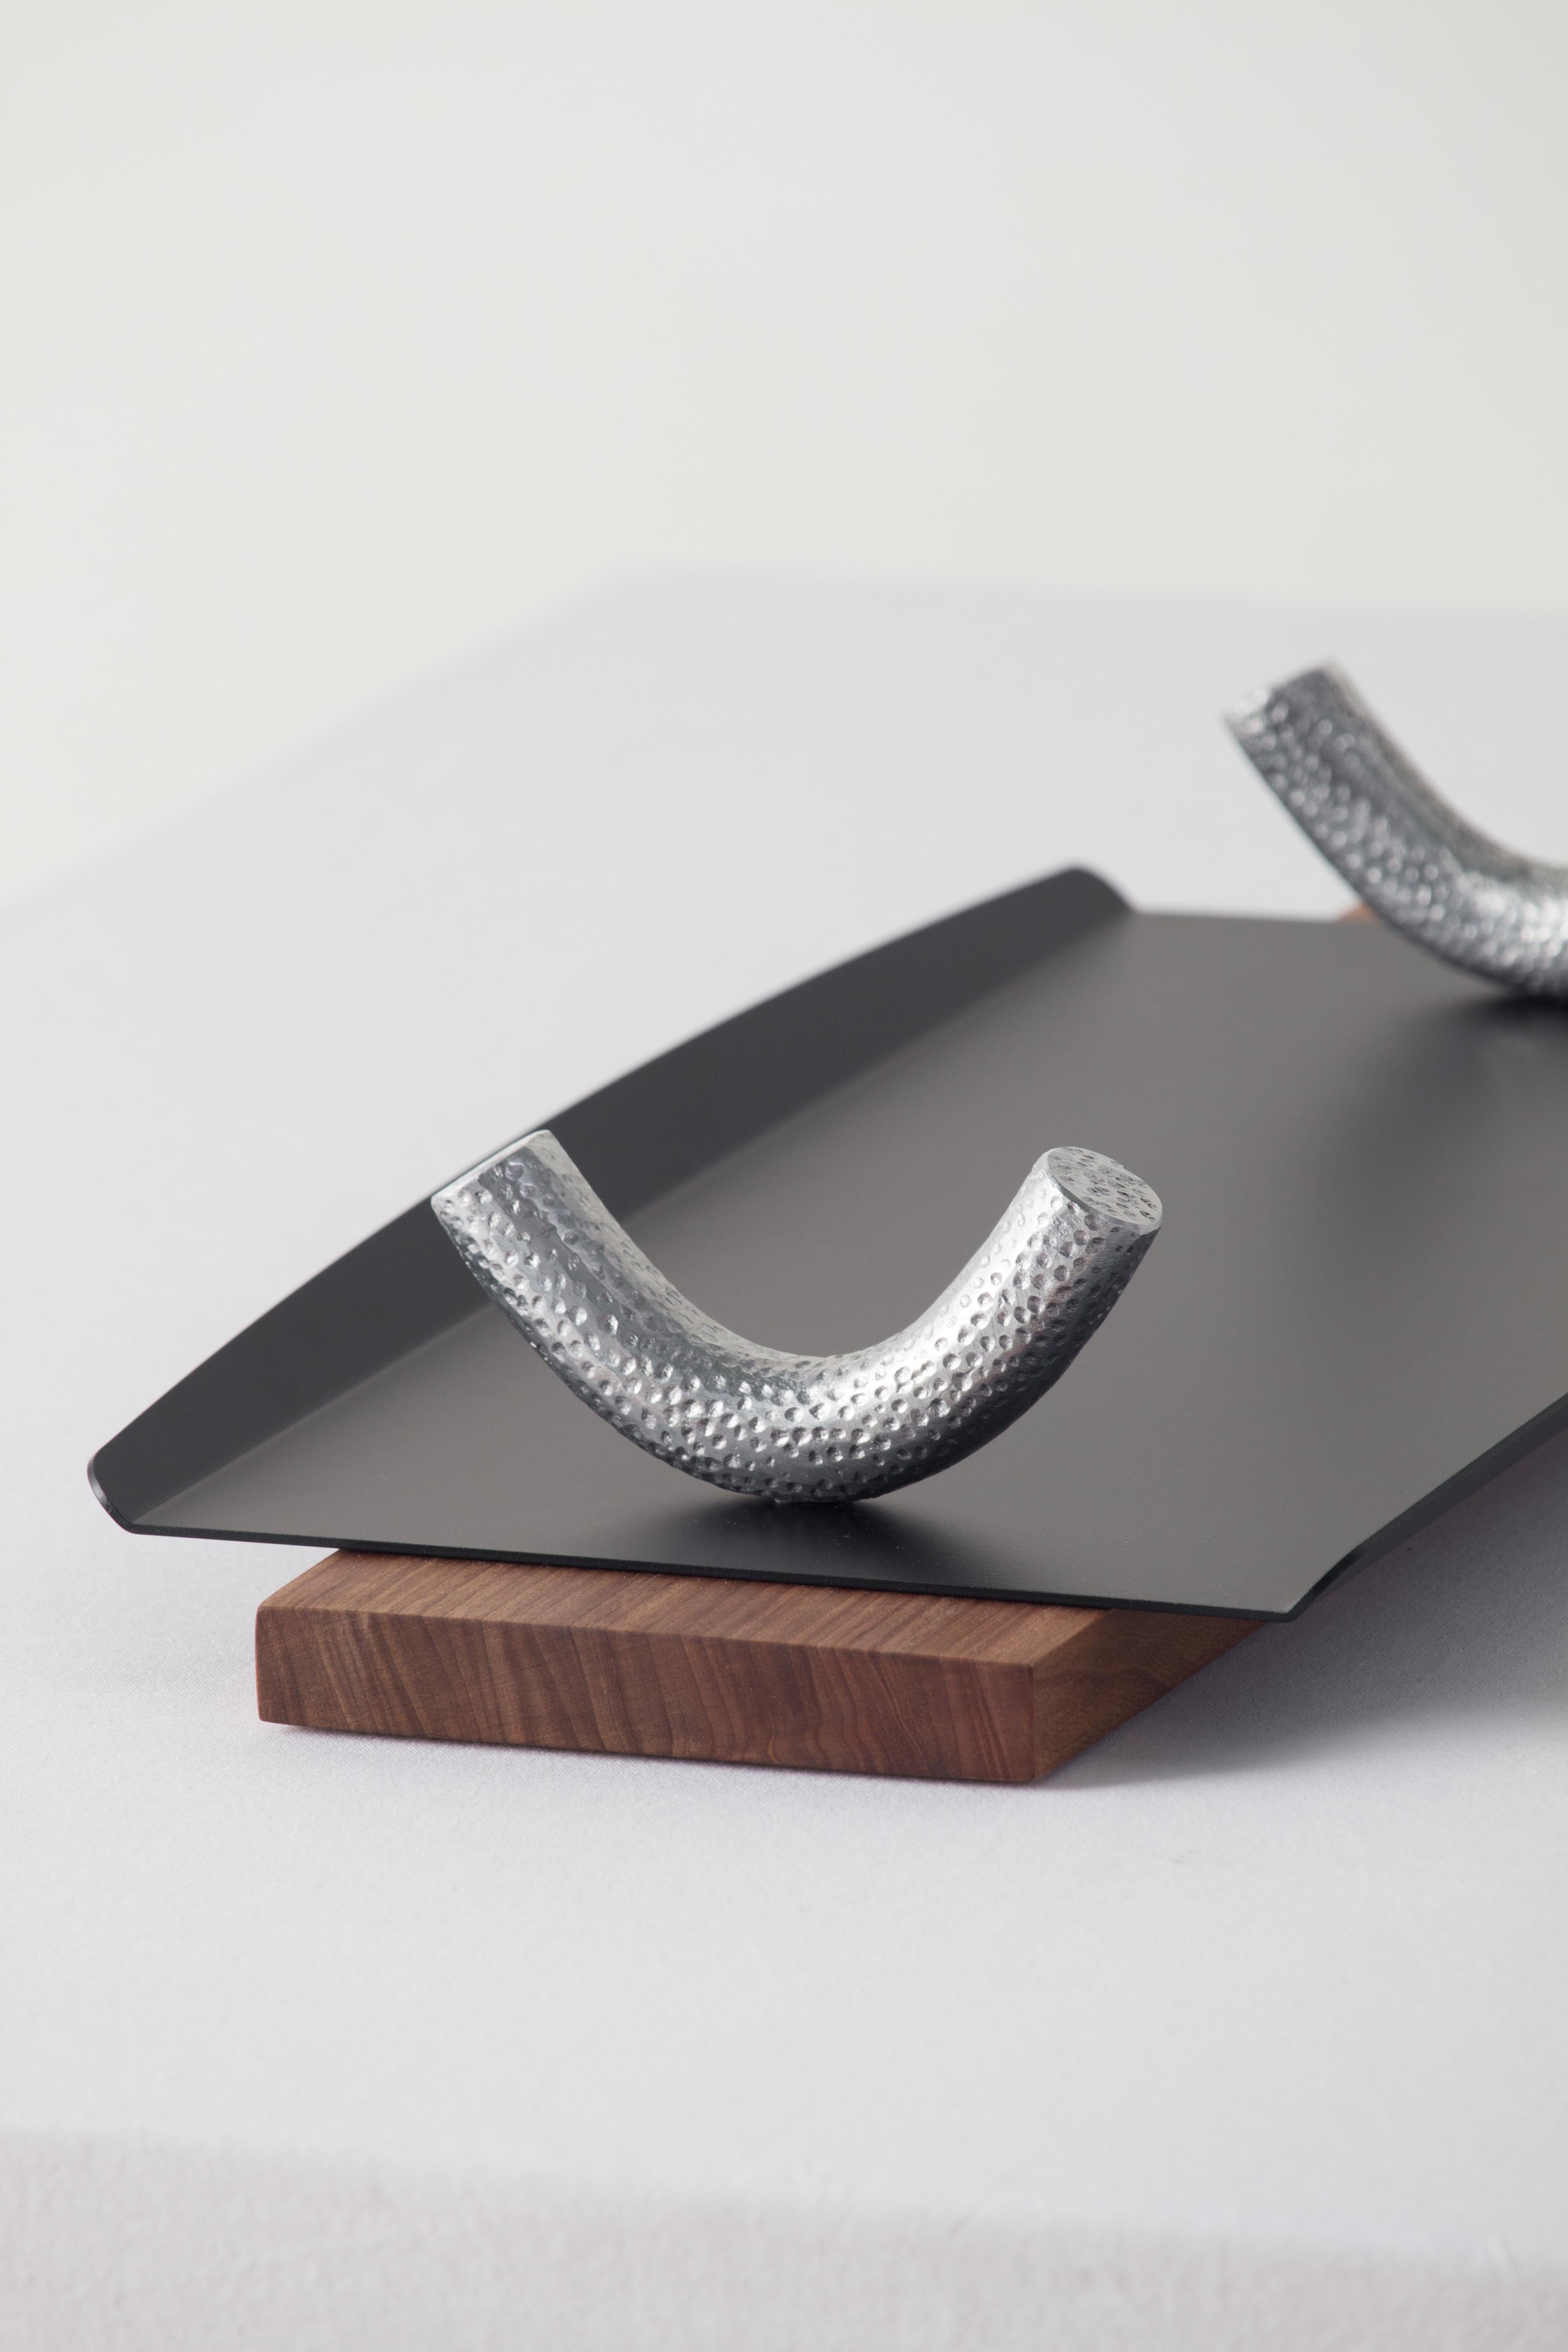 Arco Trays (Set of 2) with cast aluminum handles by Estúdio Dentro For Sale 2